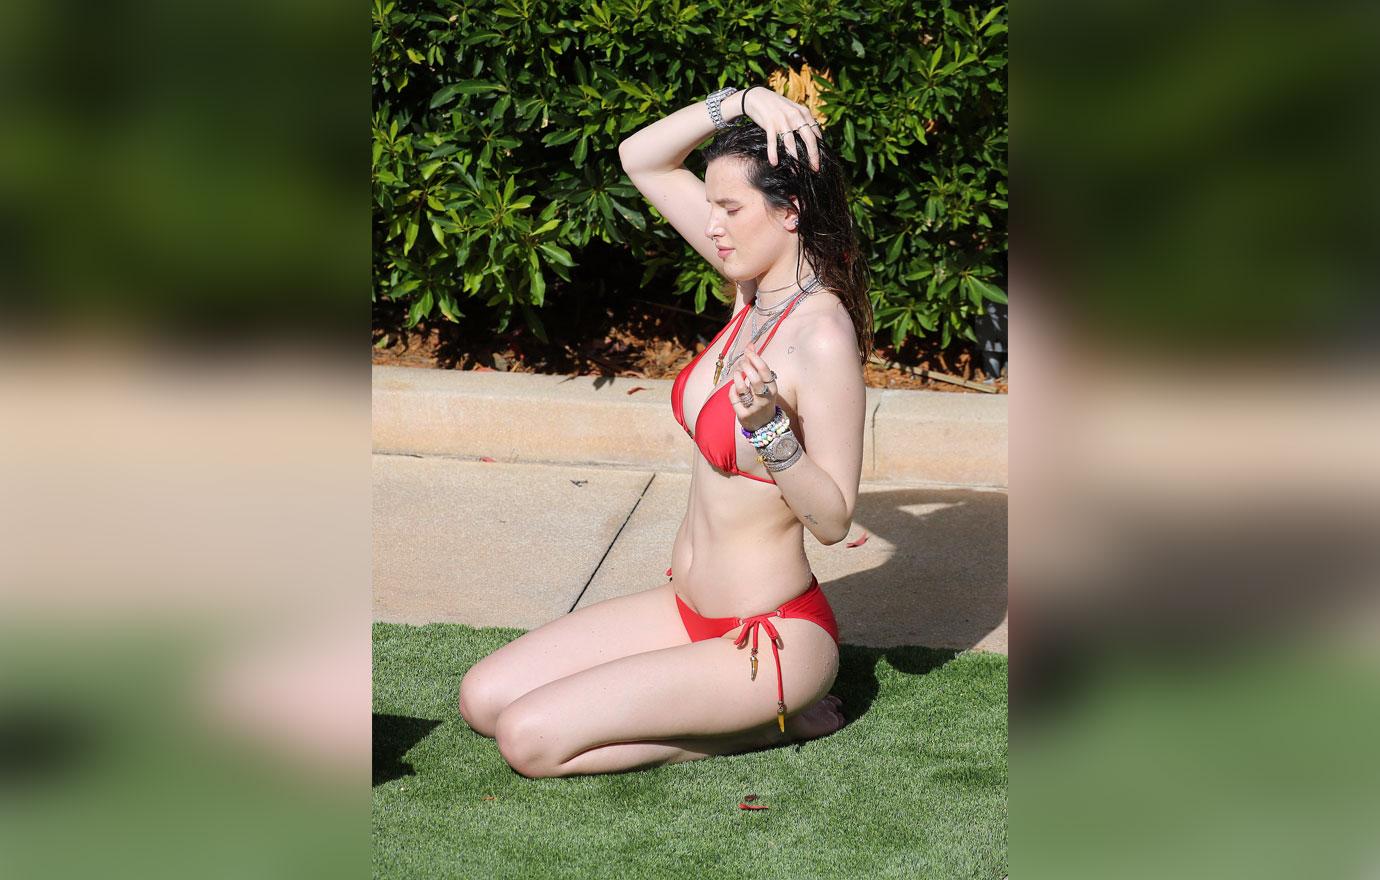 Bella Thorne Bikini Pics Ooze Sex, Beer and Armpit Hair!